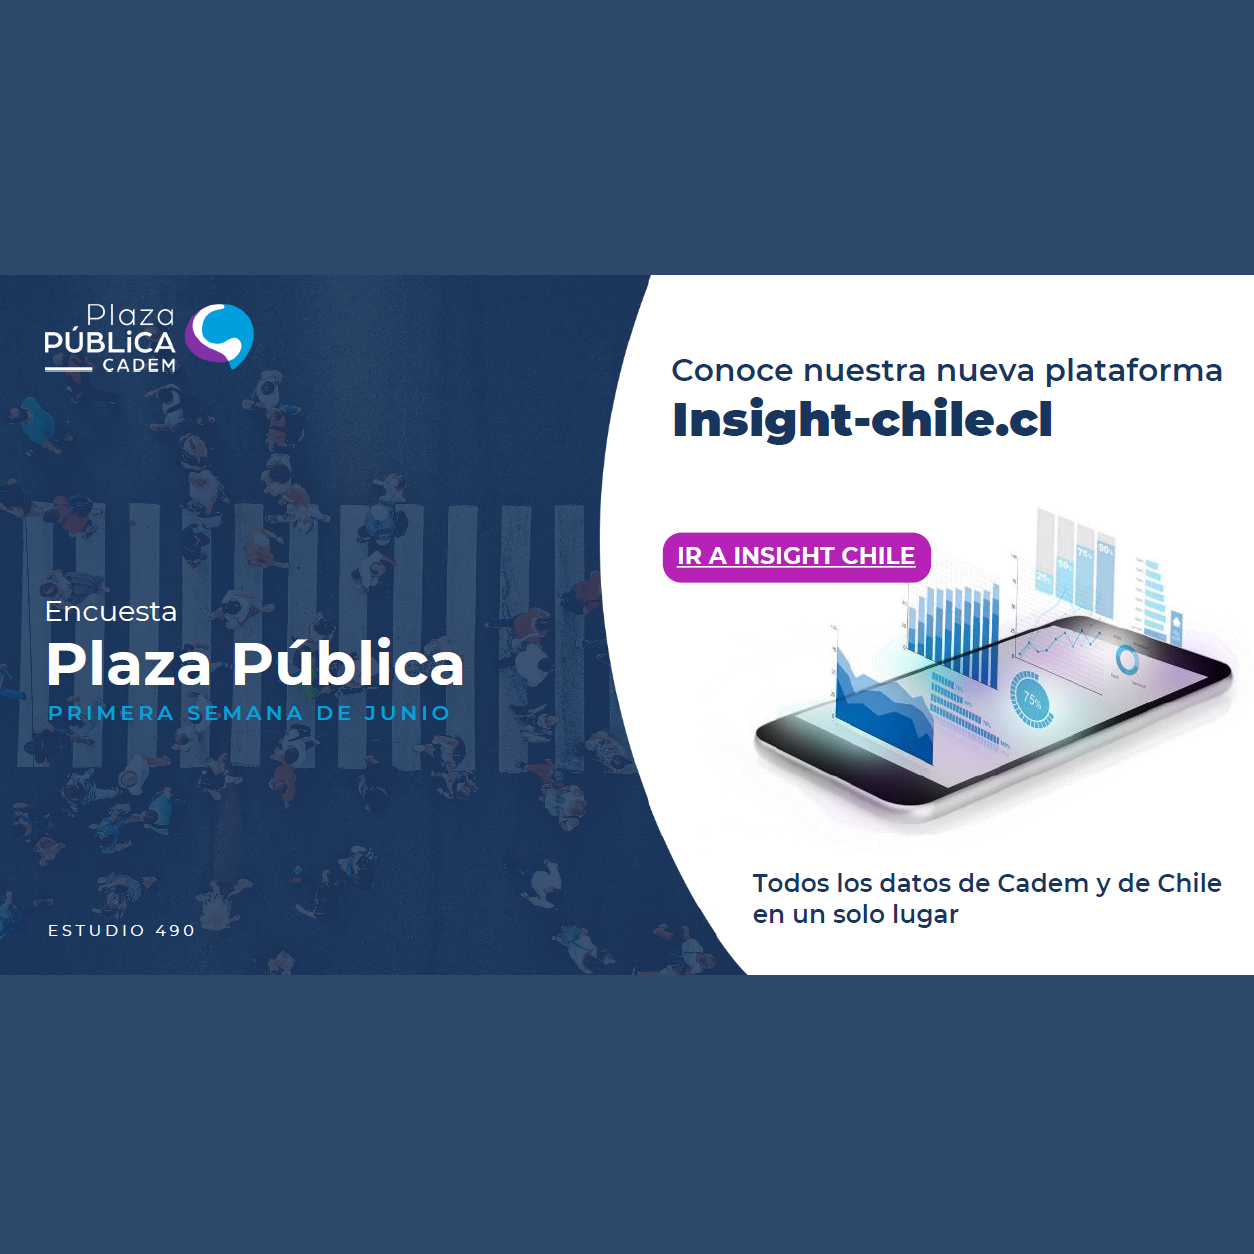 Encuesta Plaza Pública – 1ra semana de junio